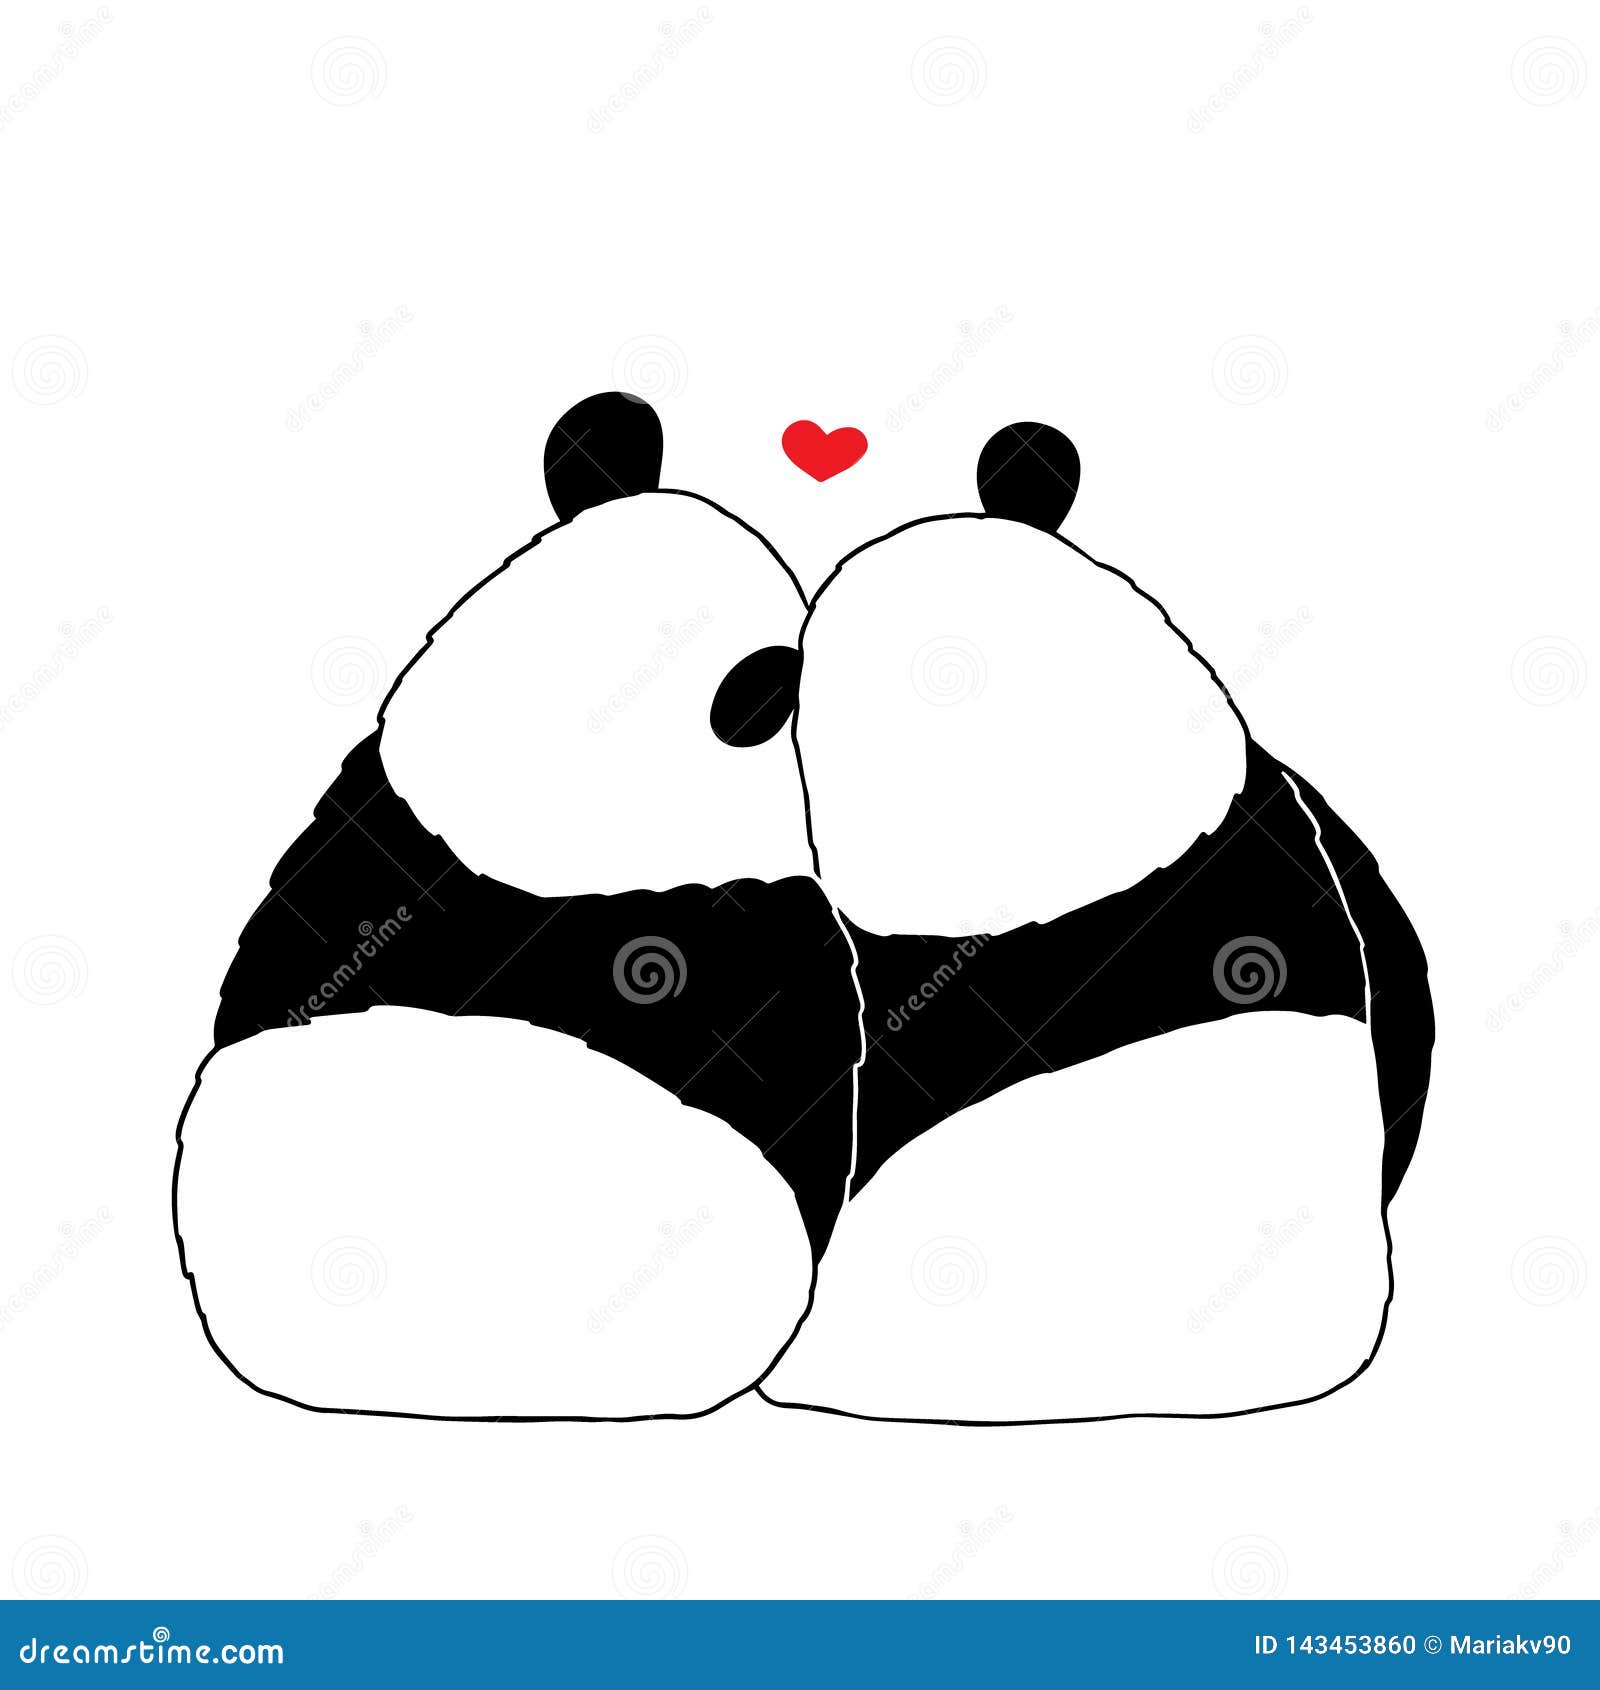 Cute panda cartoon hand drawn style Royalty Free Vector